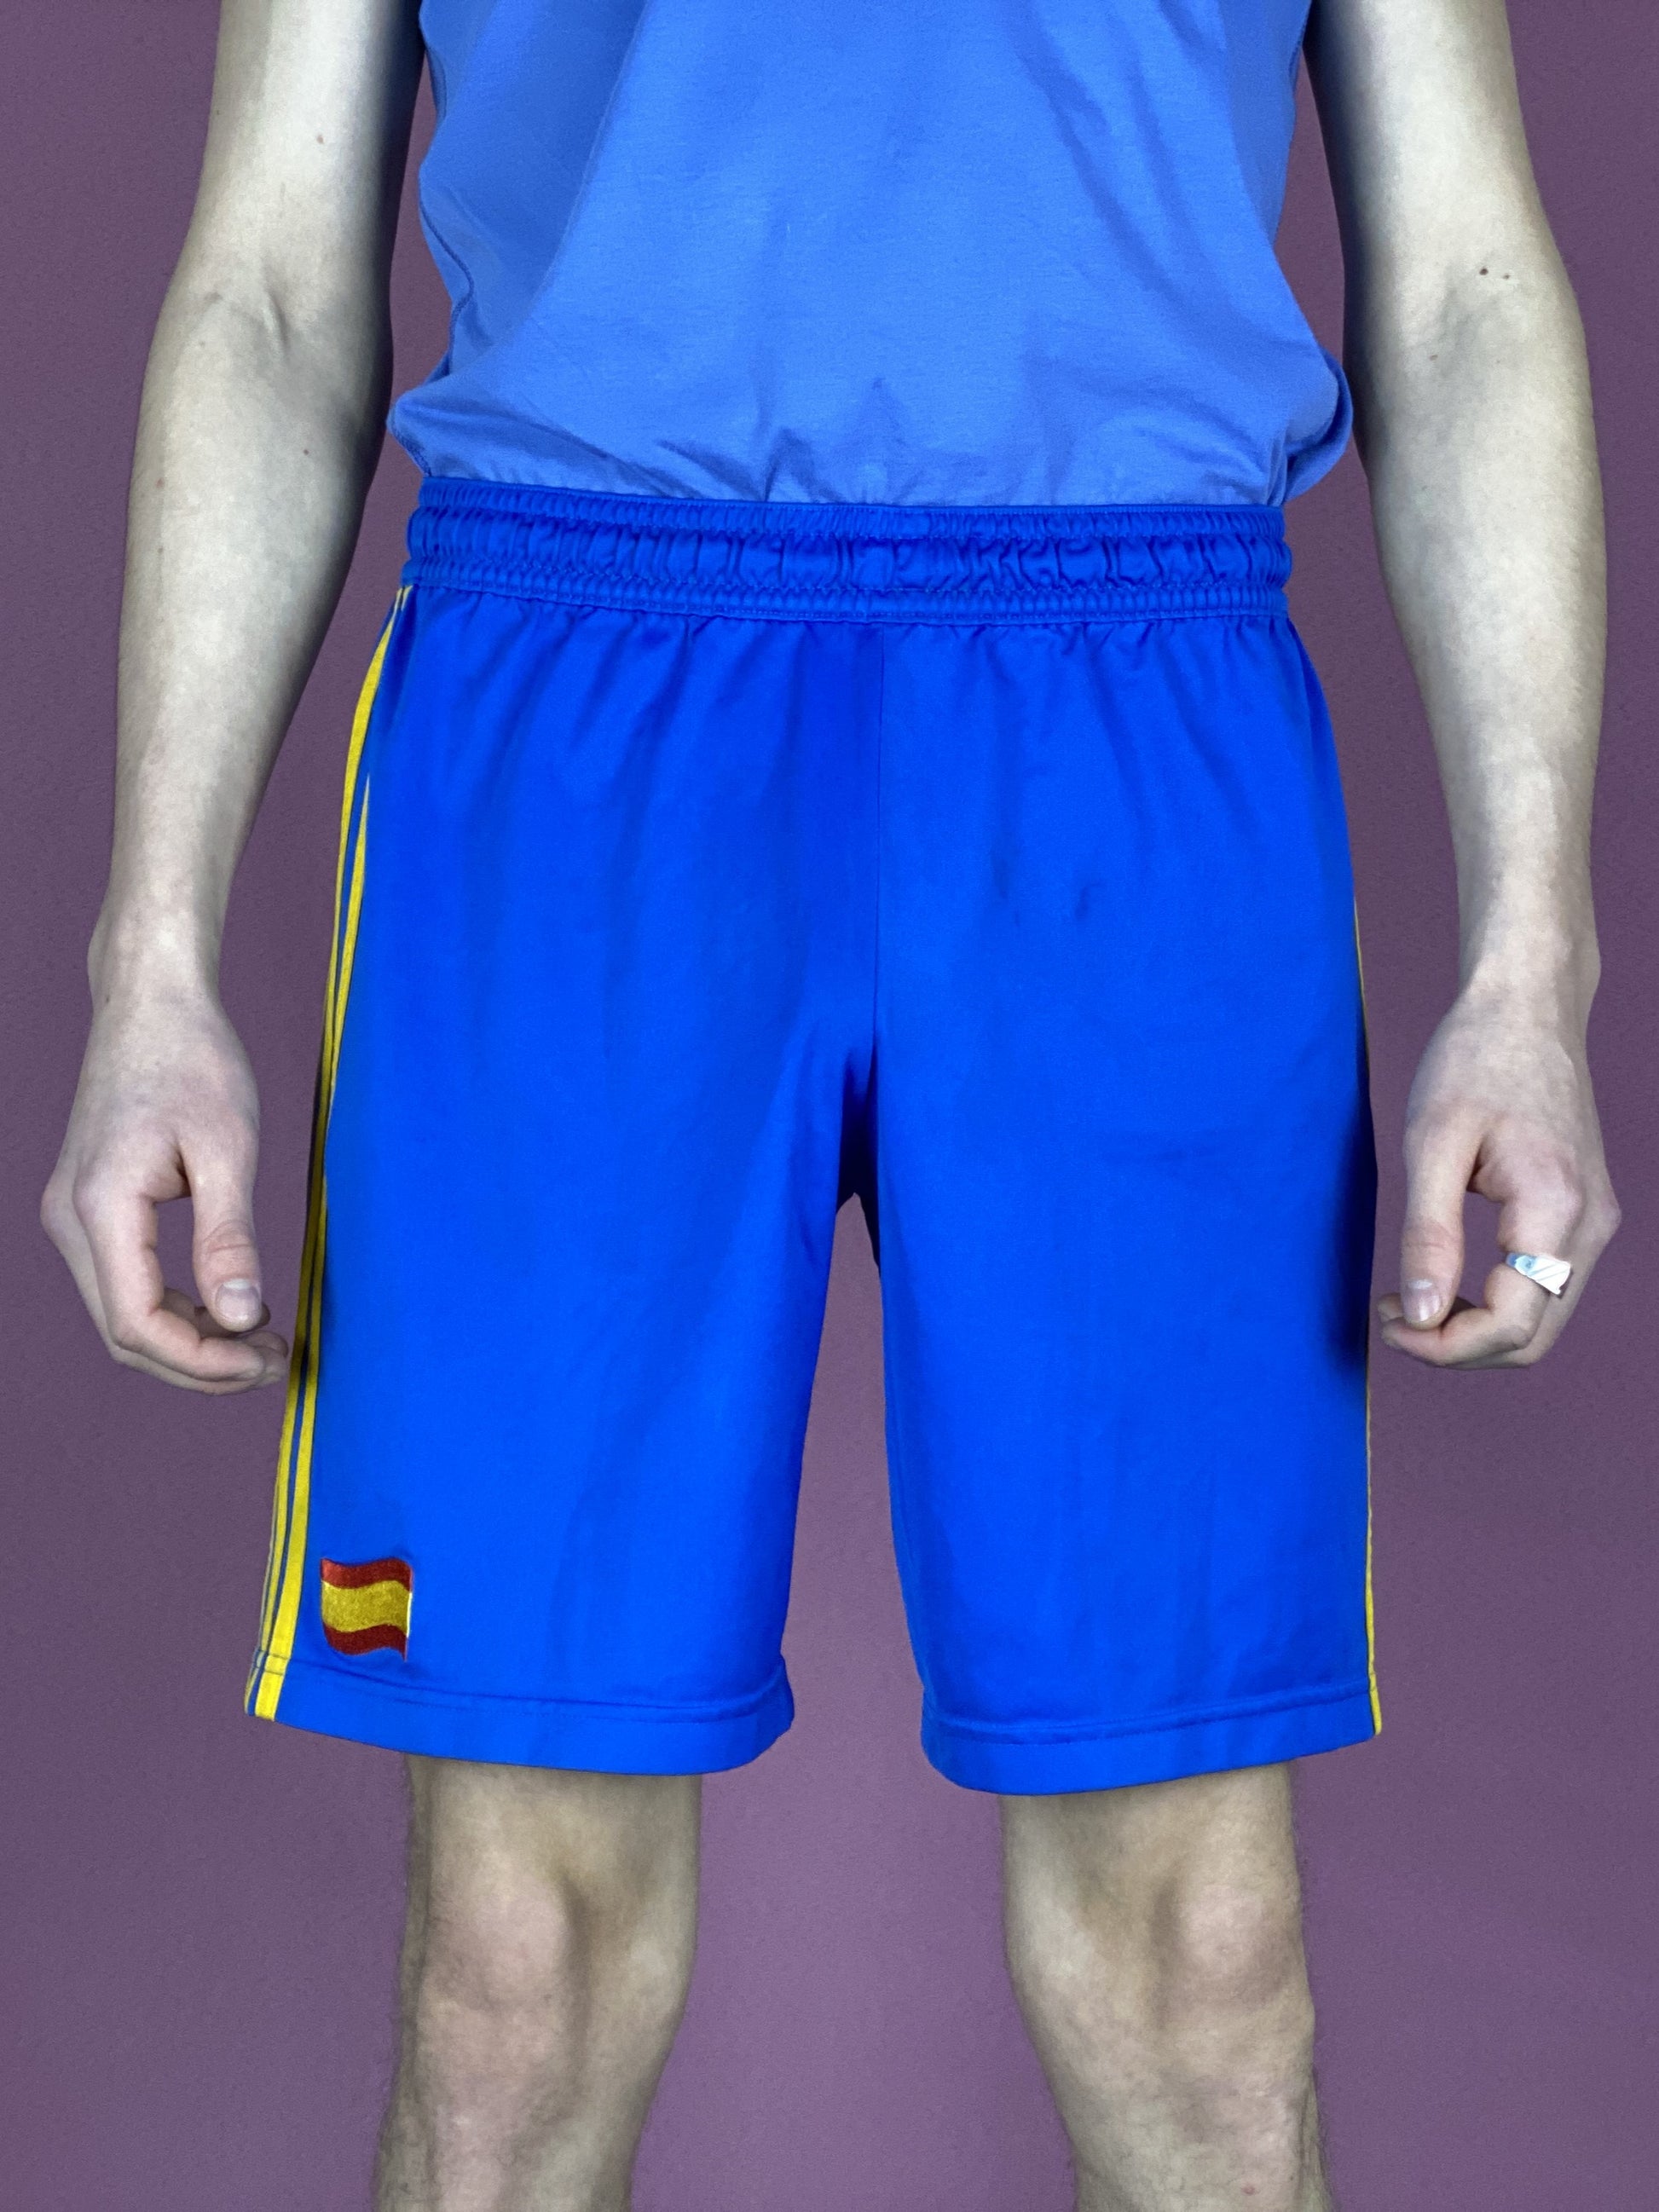 Adidas Spain Vintage Men's Track Shorts - Medium Blue Polyester